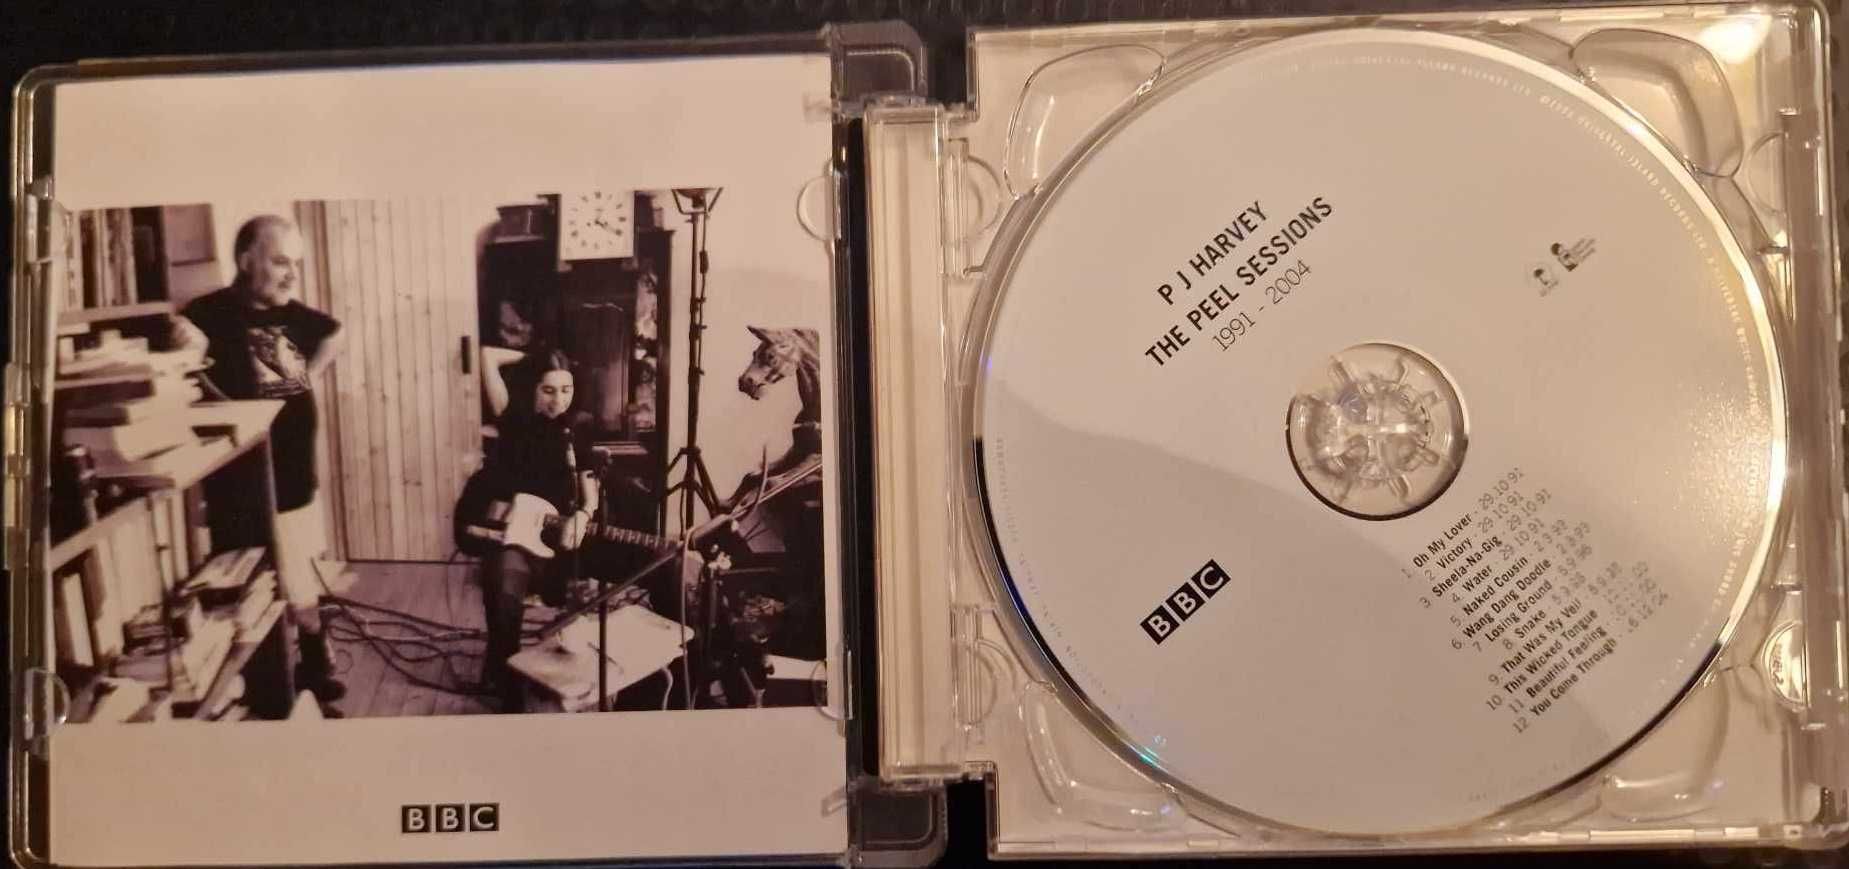 The Peel Sessions 1991 - 2004 PJ Harvey CD